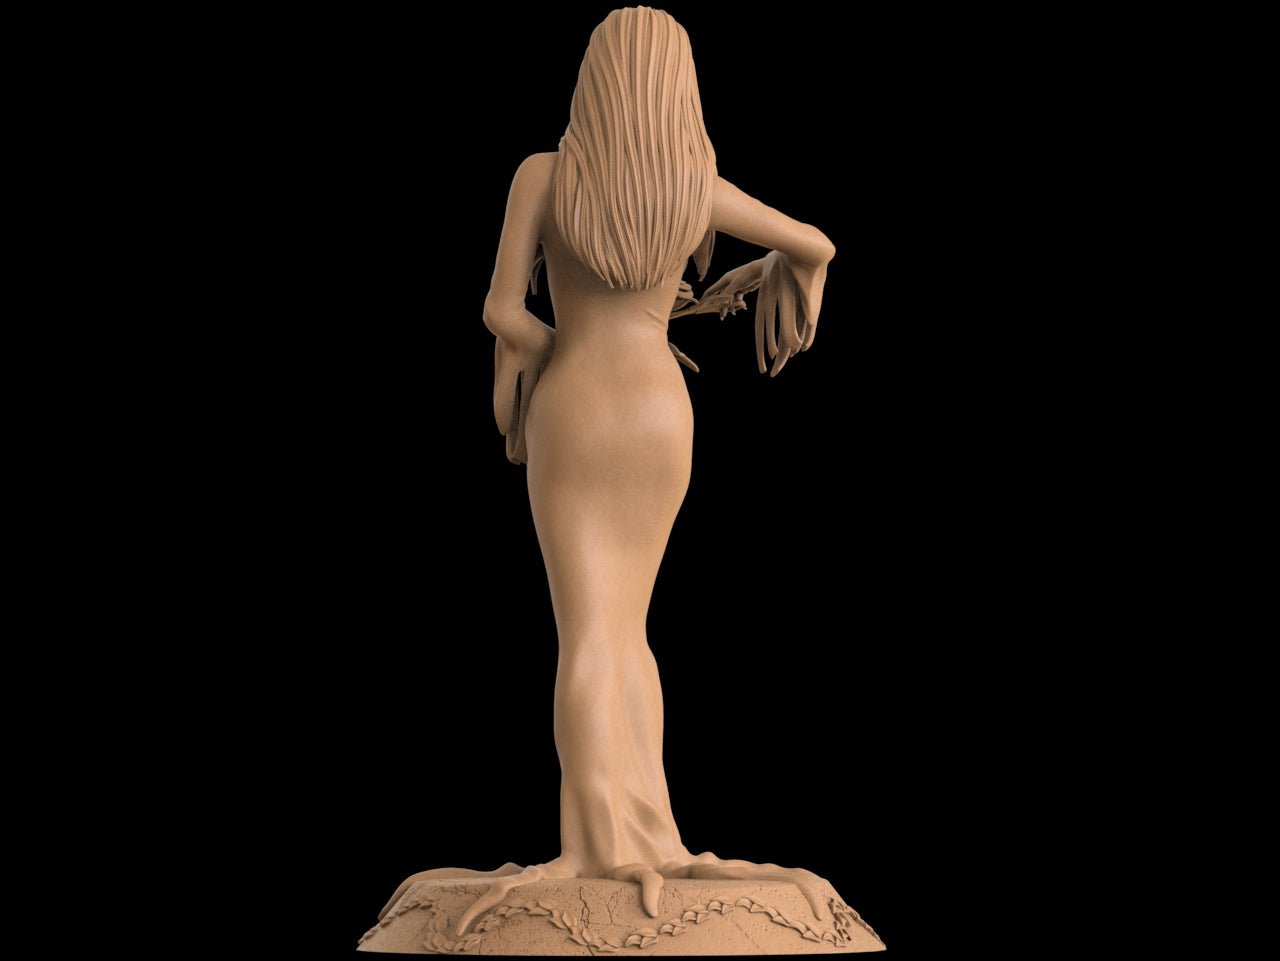 Morticia Addams NSFW 3D Printed figurine Fanart by ca_3d_art